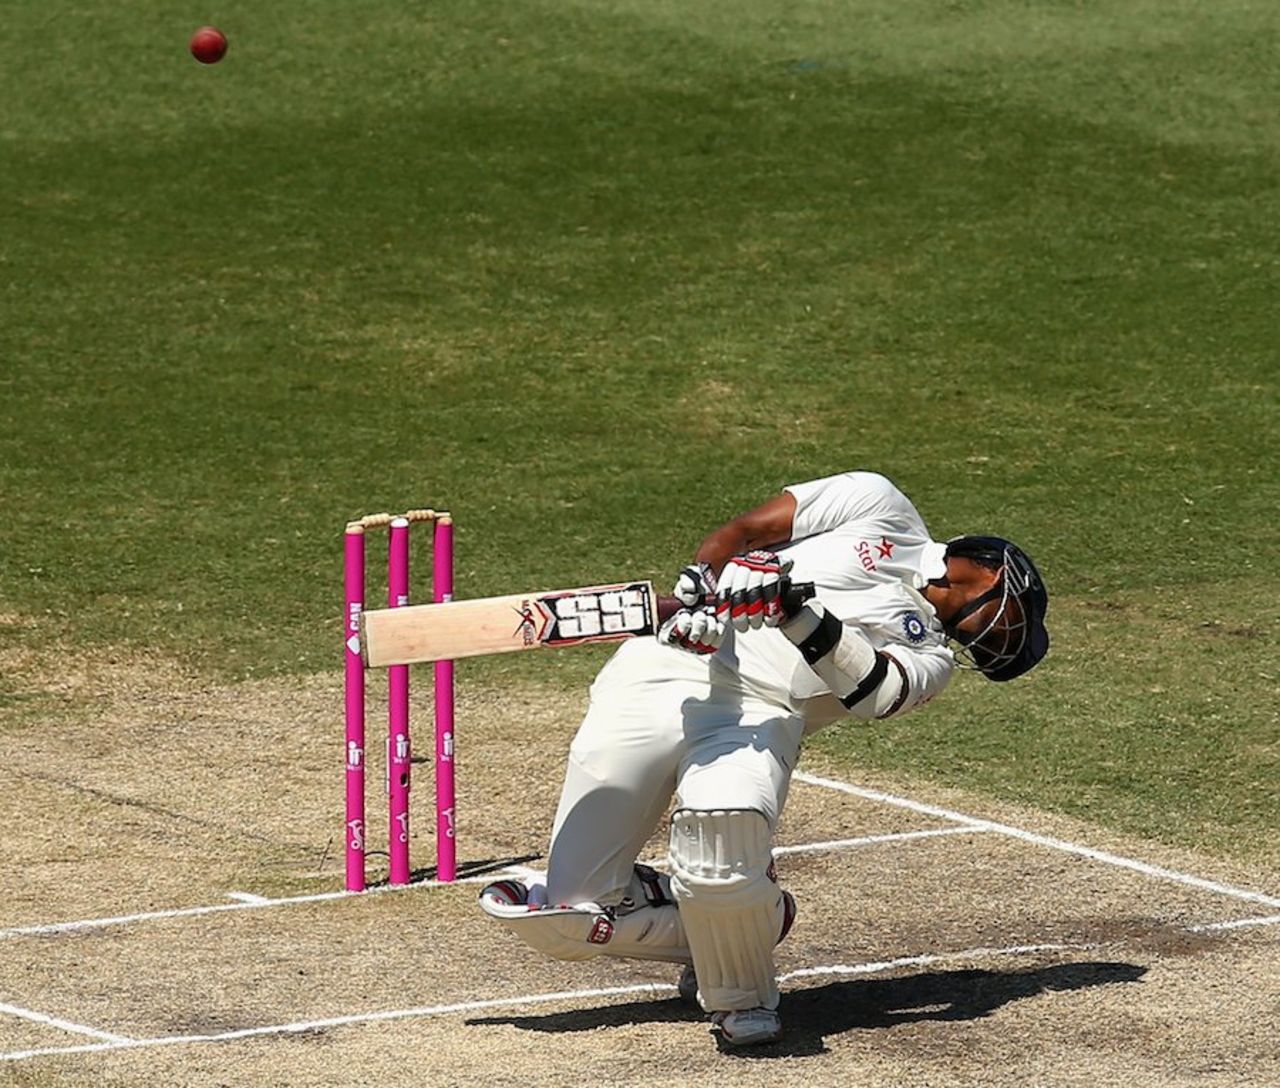 Wriddhiman Saha avoids a bouncer, Australia v India, 4th Test, Sydney, 4th day, January 9, 2015